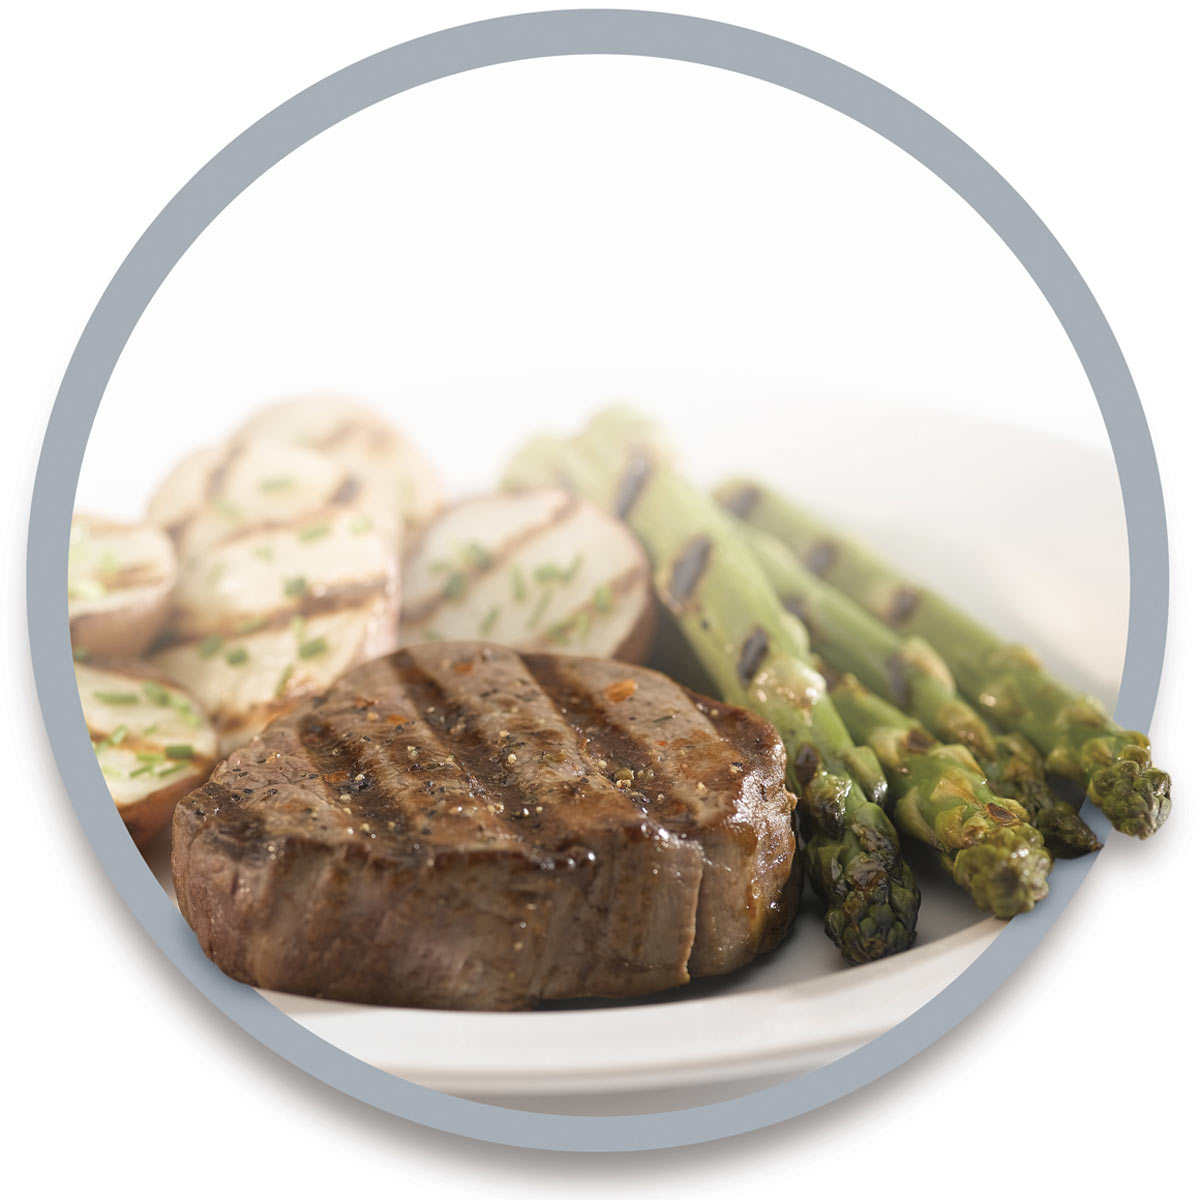 Hamilton Beach Steak Lover's™ Indoor Grill - 25331